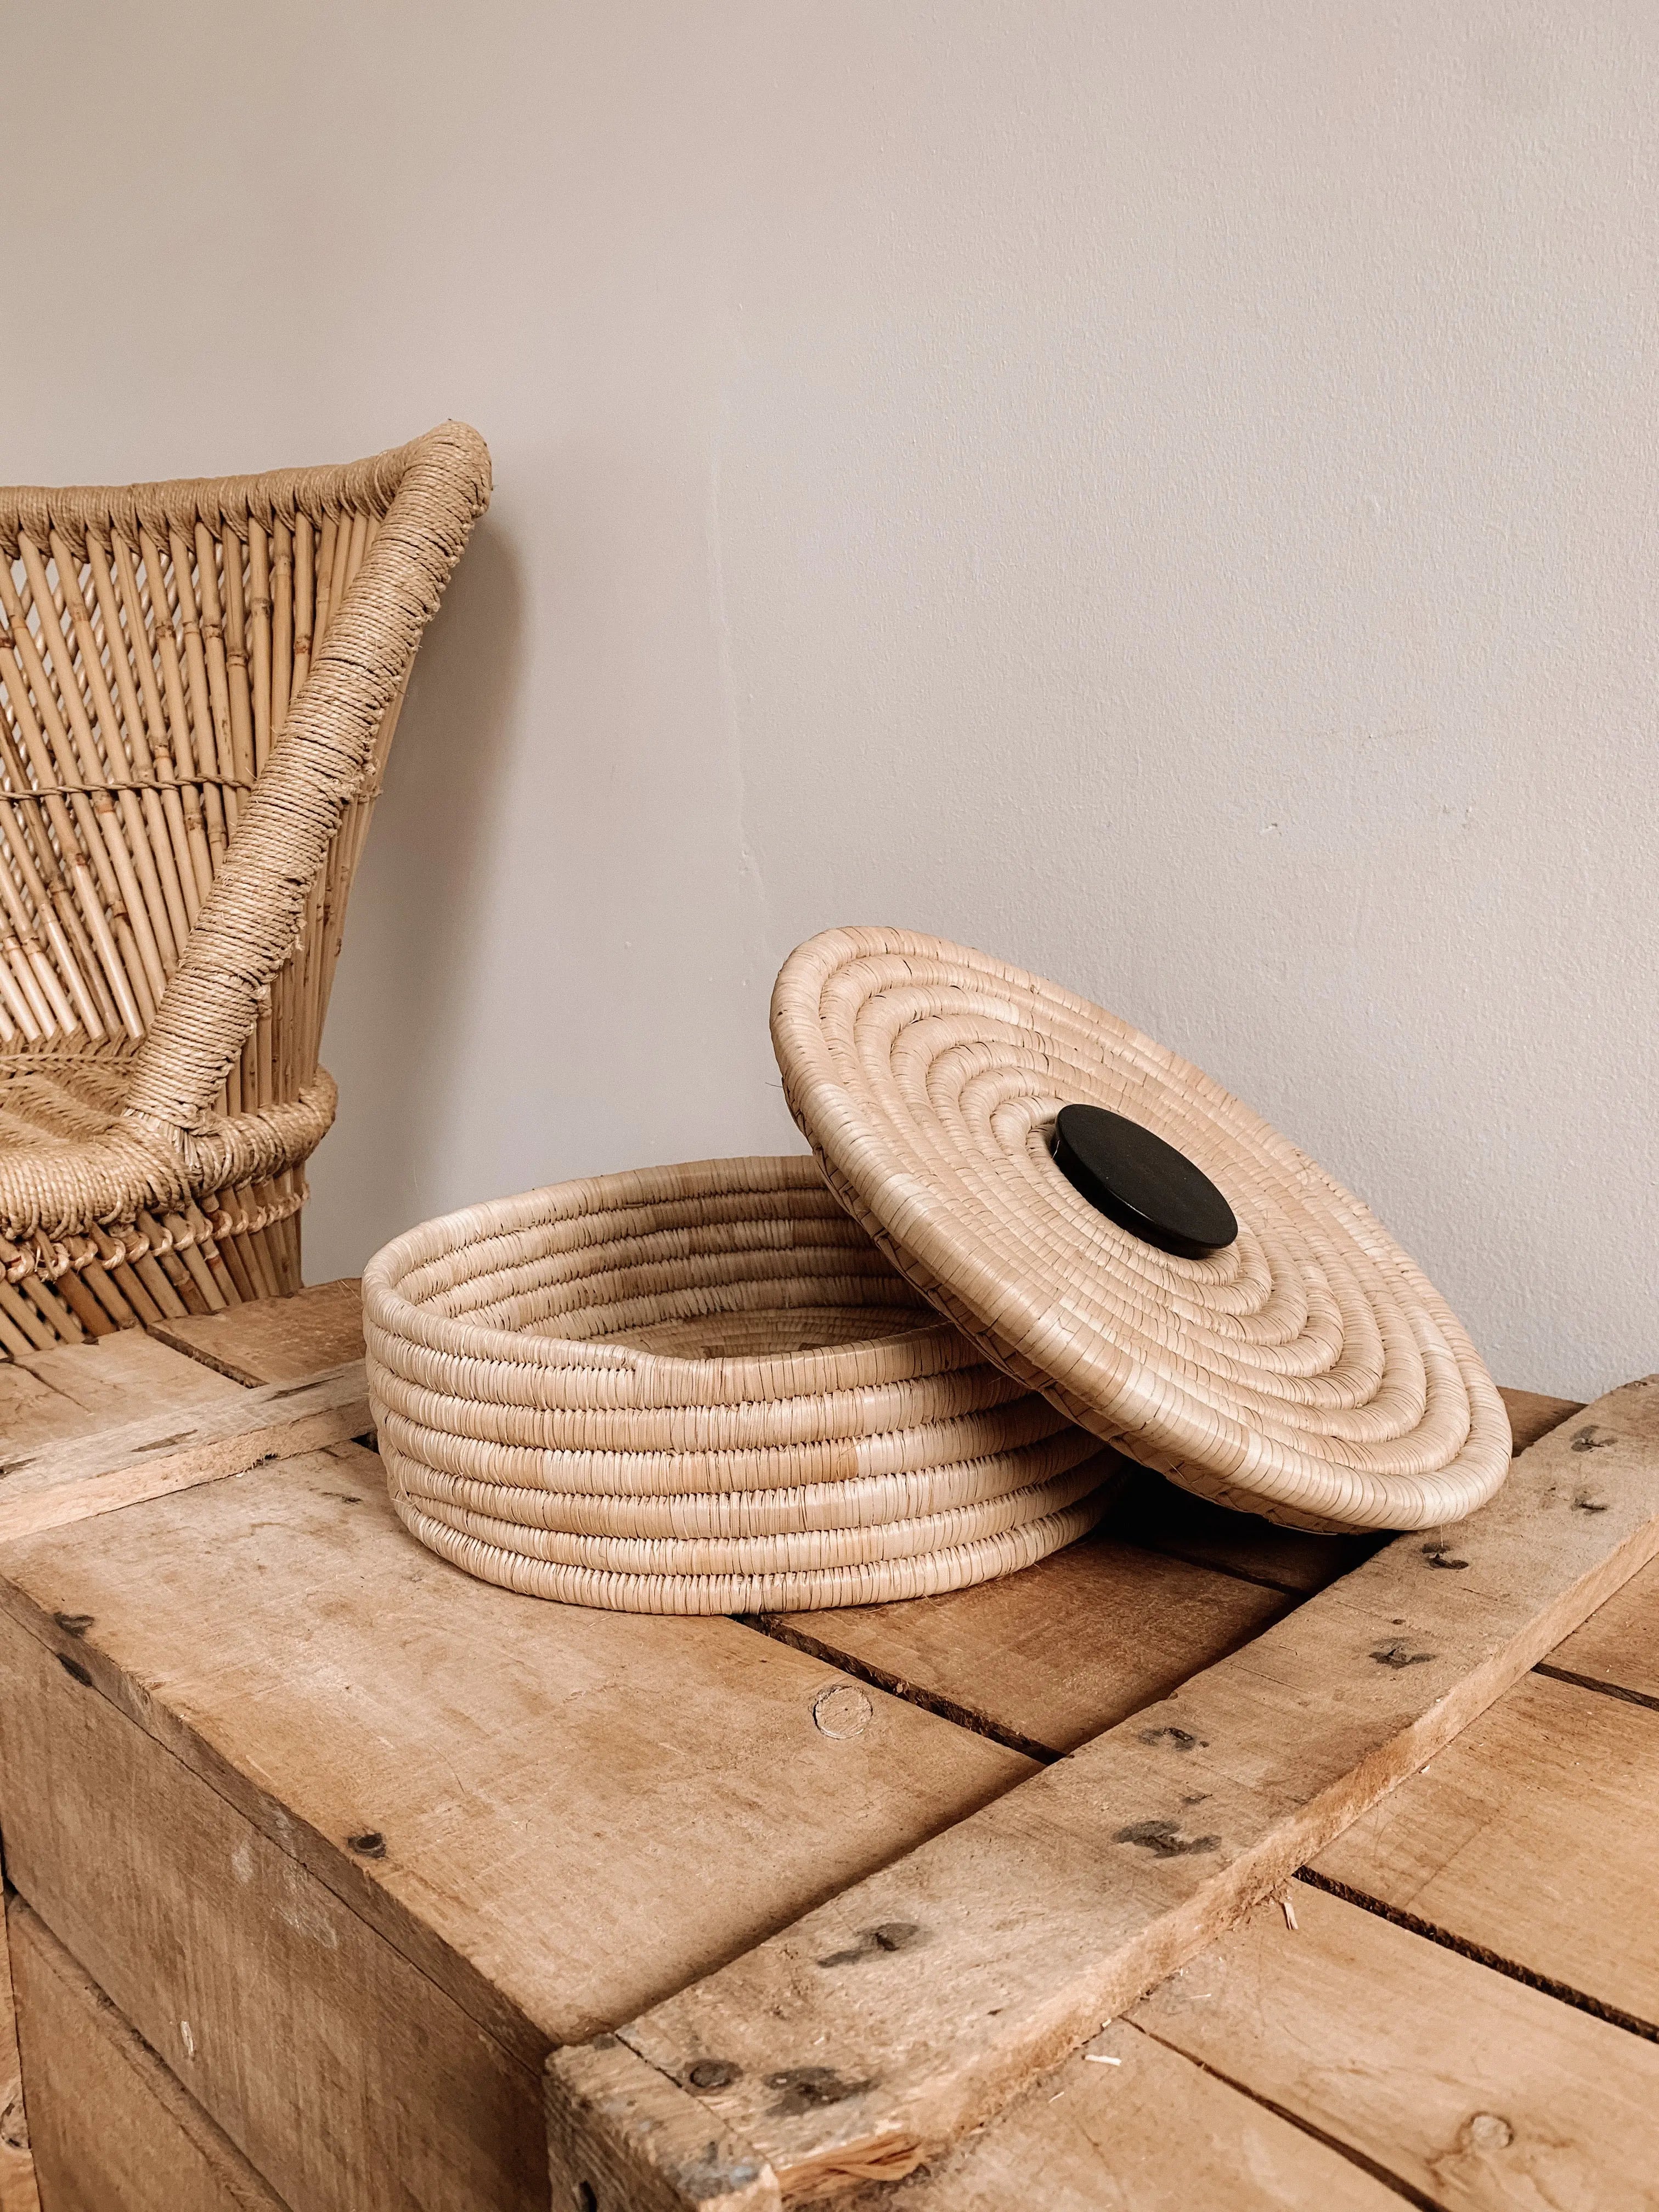 Medium cylinder Mambo Baskets